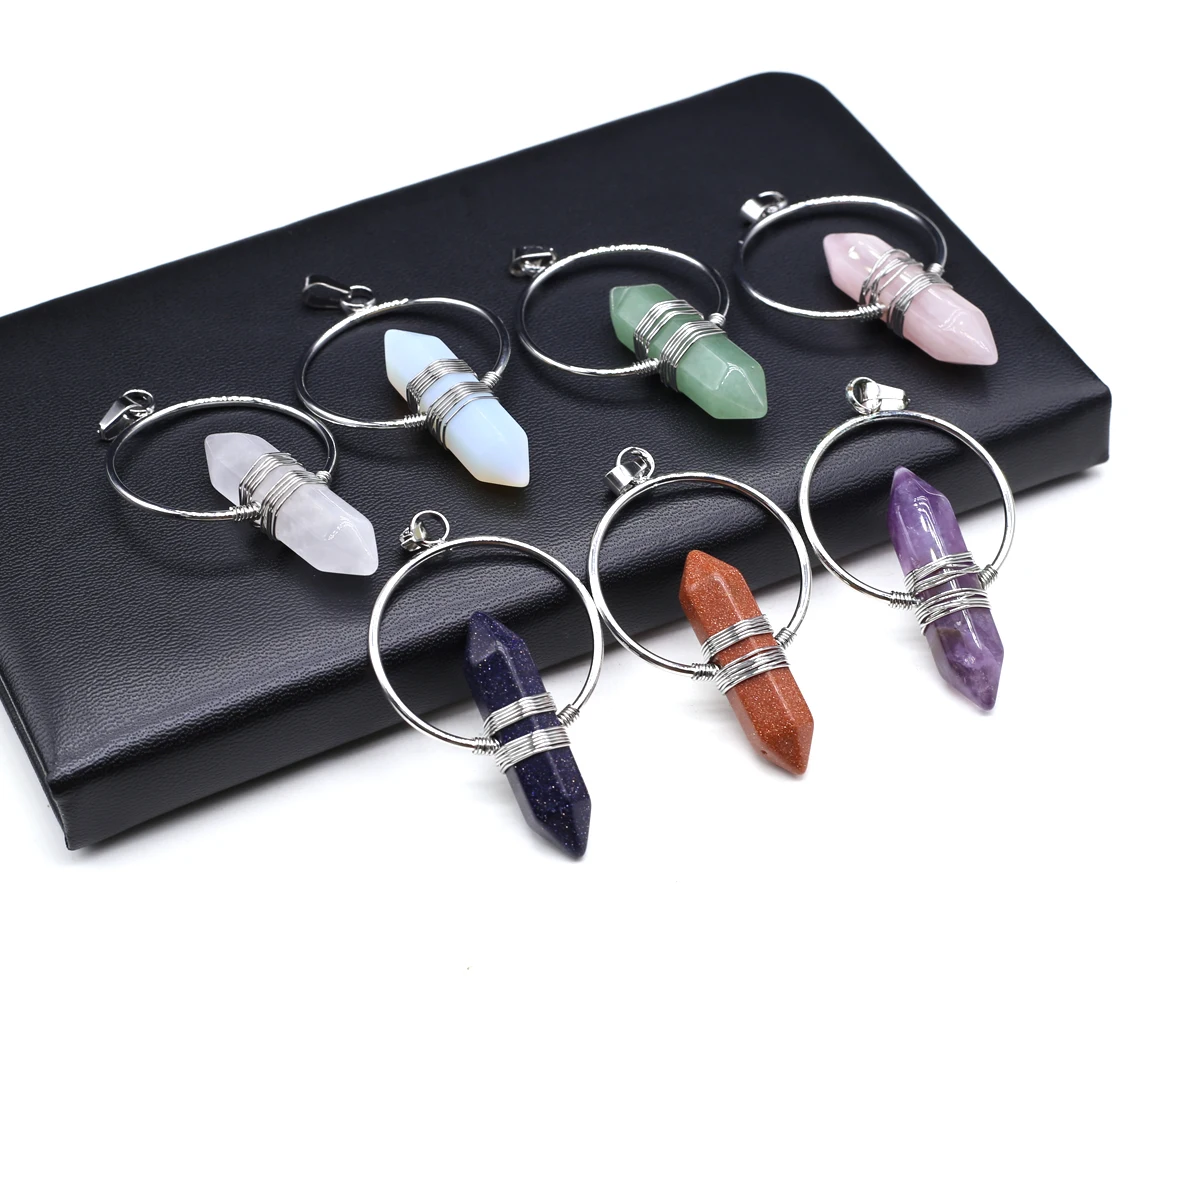 

10PCS Wholesale Natural Stone Hexagonal Prism Shape Pendant Reiki Healing Jewelry DIY Making Necklace Earring Accessories